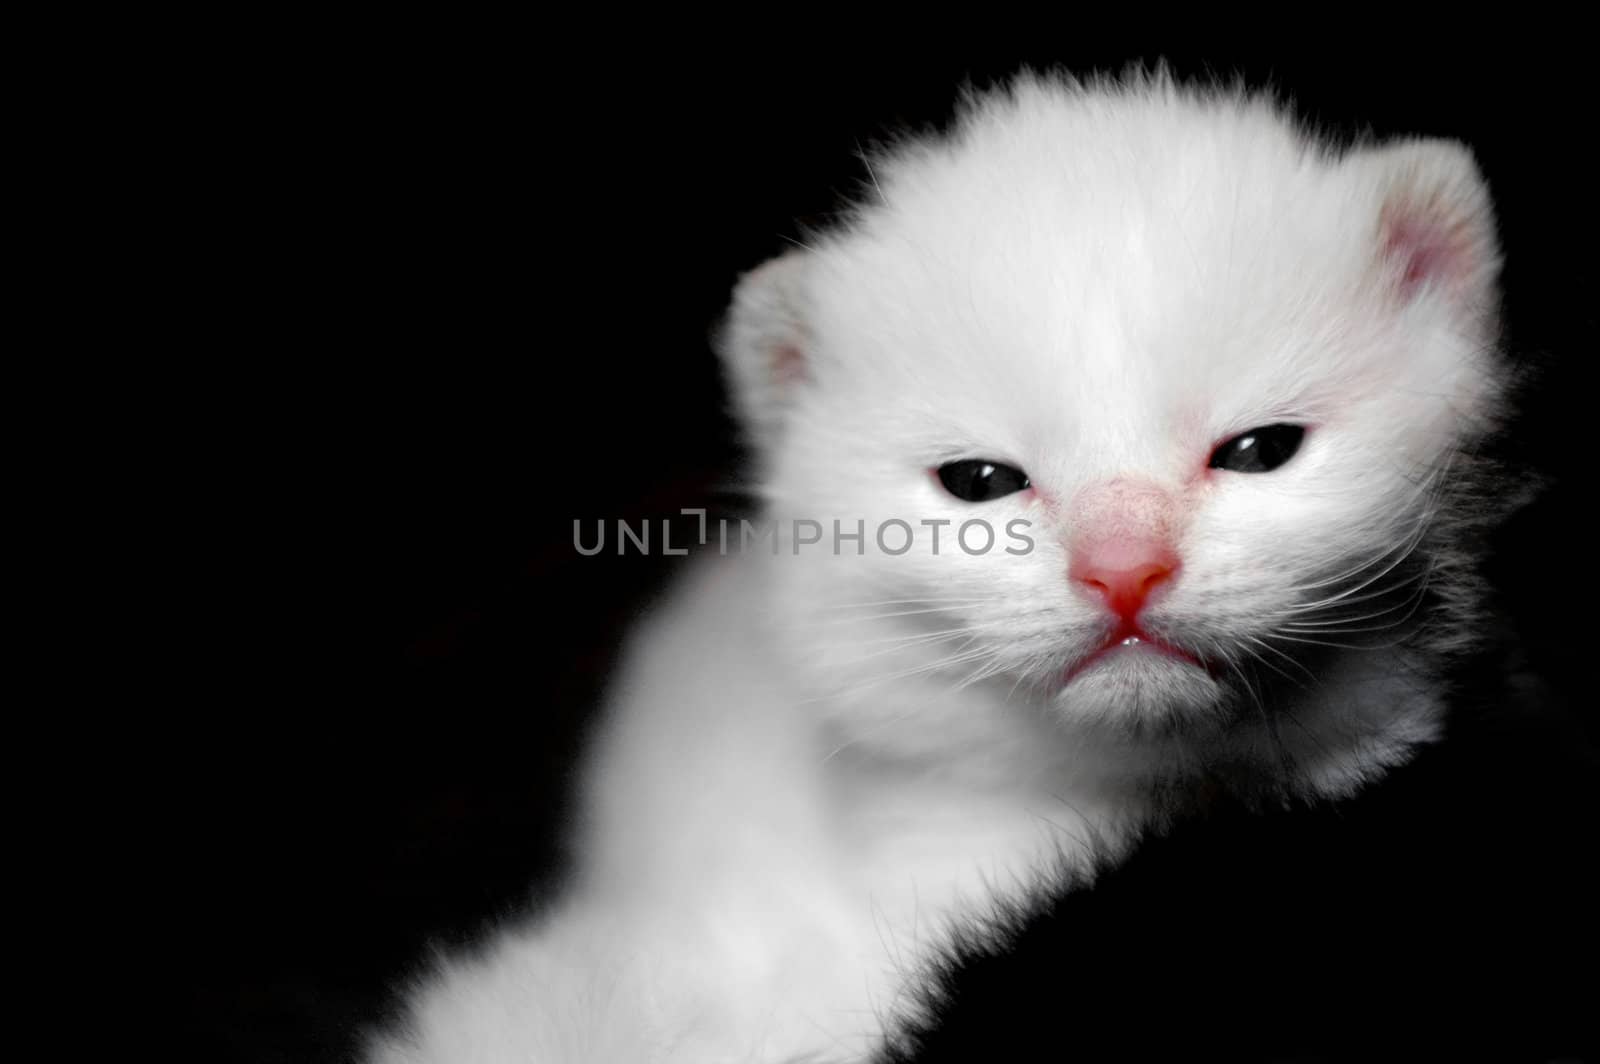 white kitten on a black background